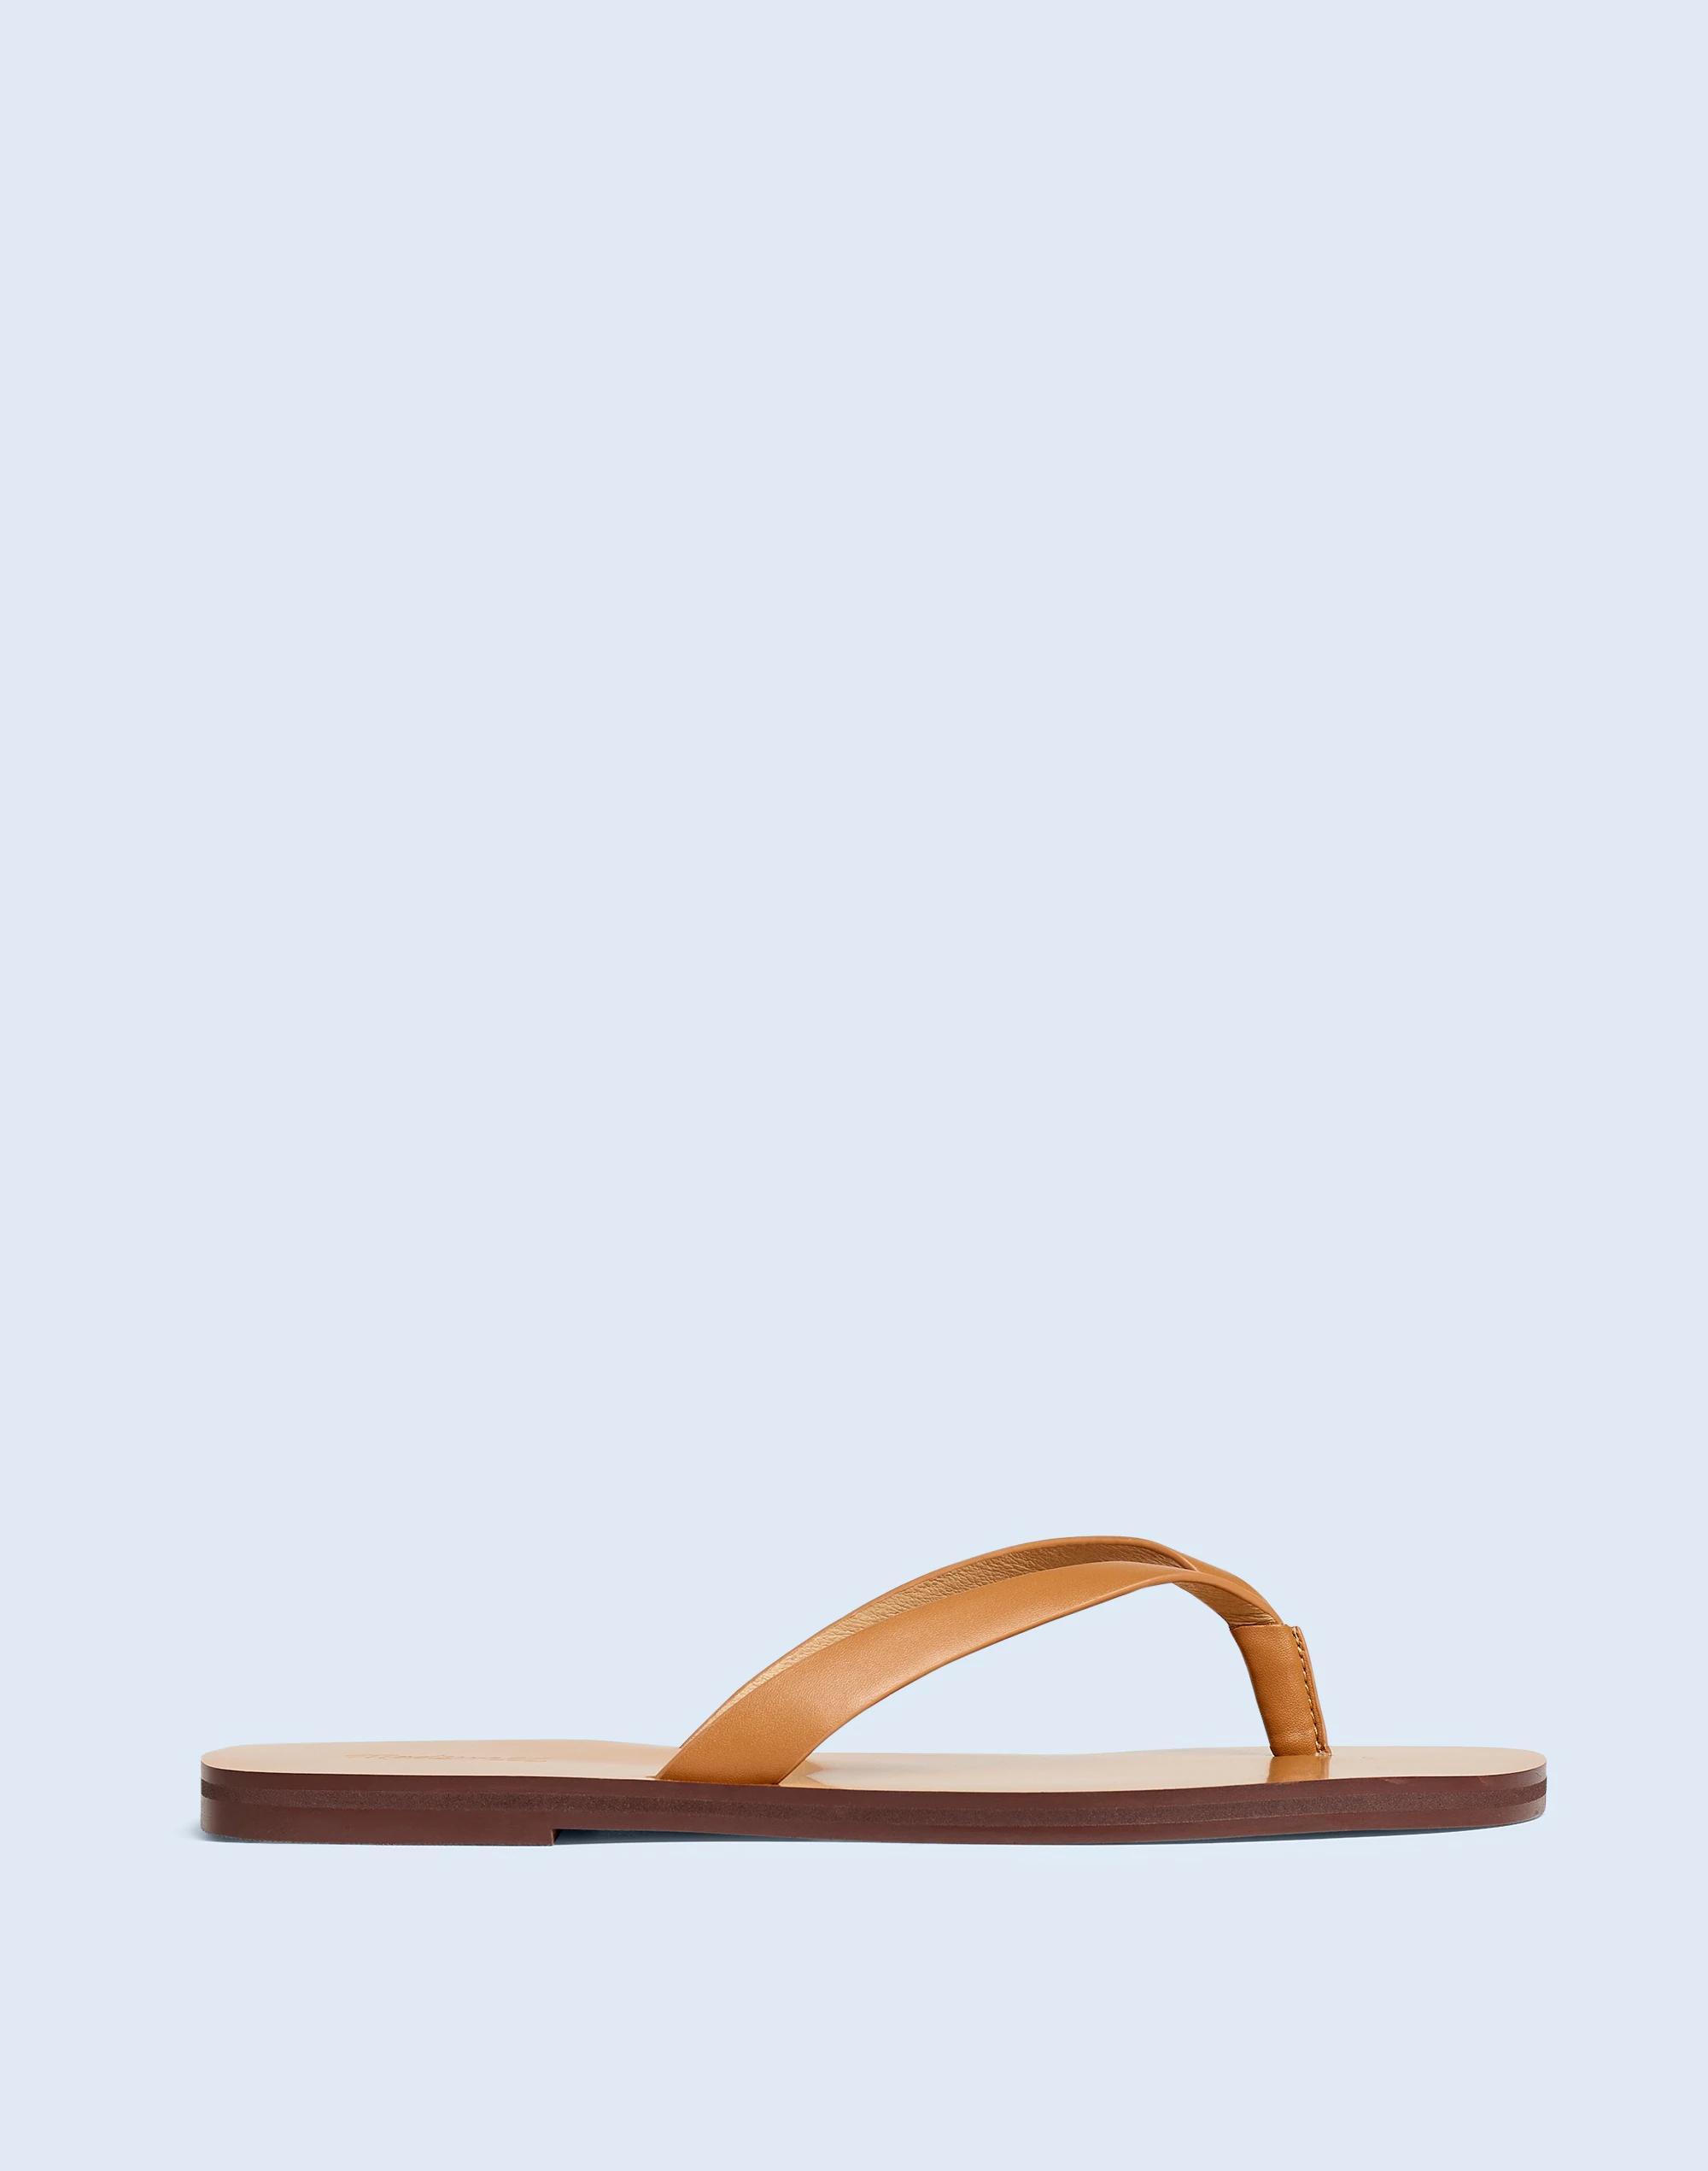 The Gabi Thong Slide Sandal in Shiny Leather Product Image